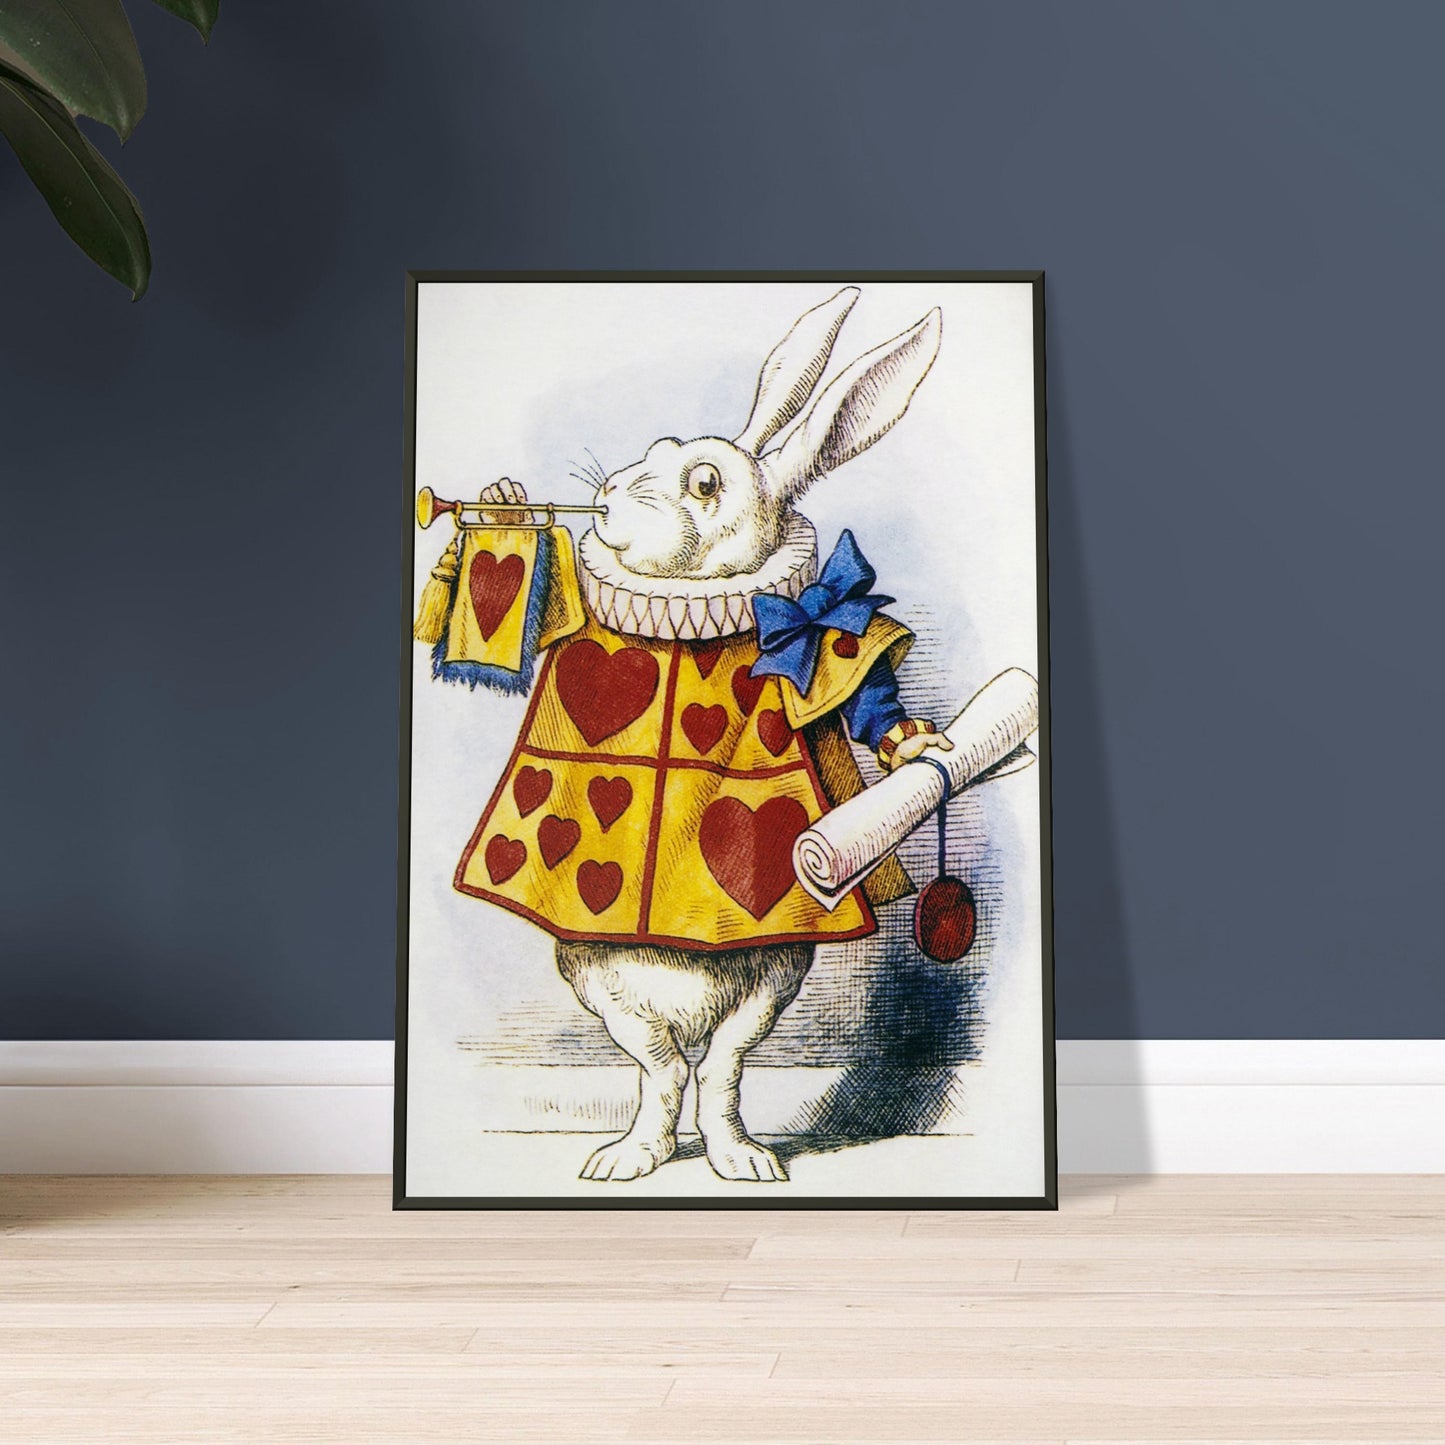 The White Rabbit - Alice In Wonderland